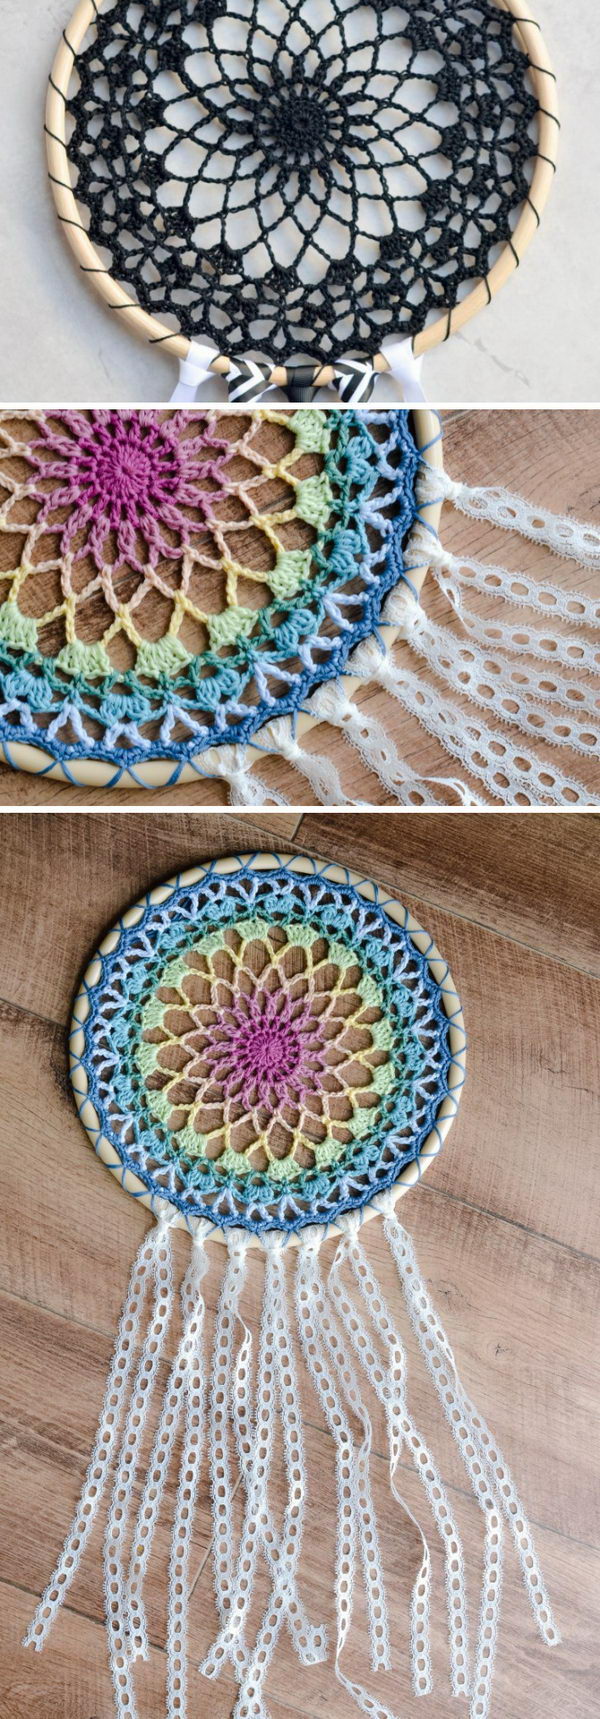 15-crochet-dream-catcher-patterns-and-tutorials-2022